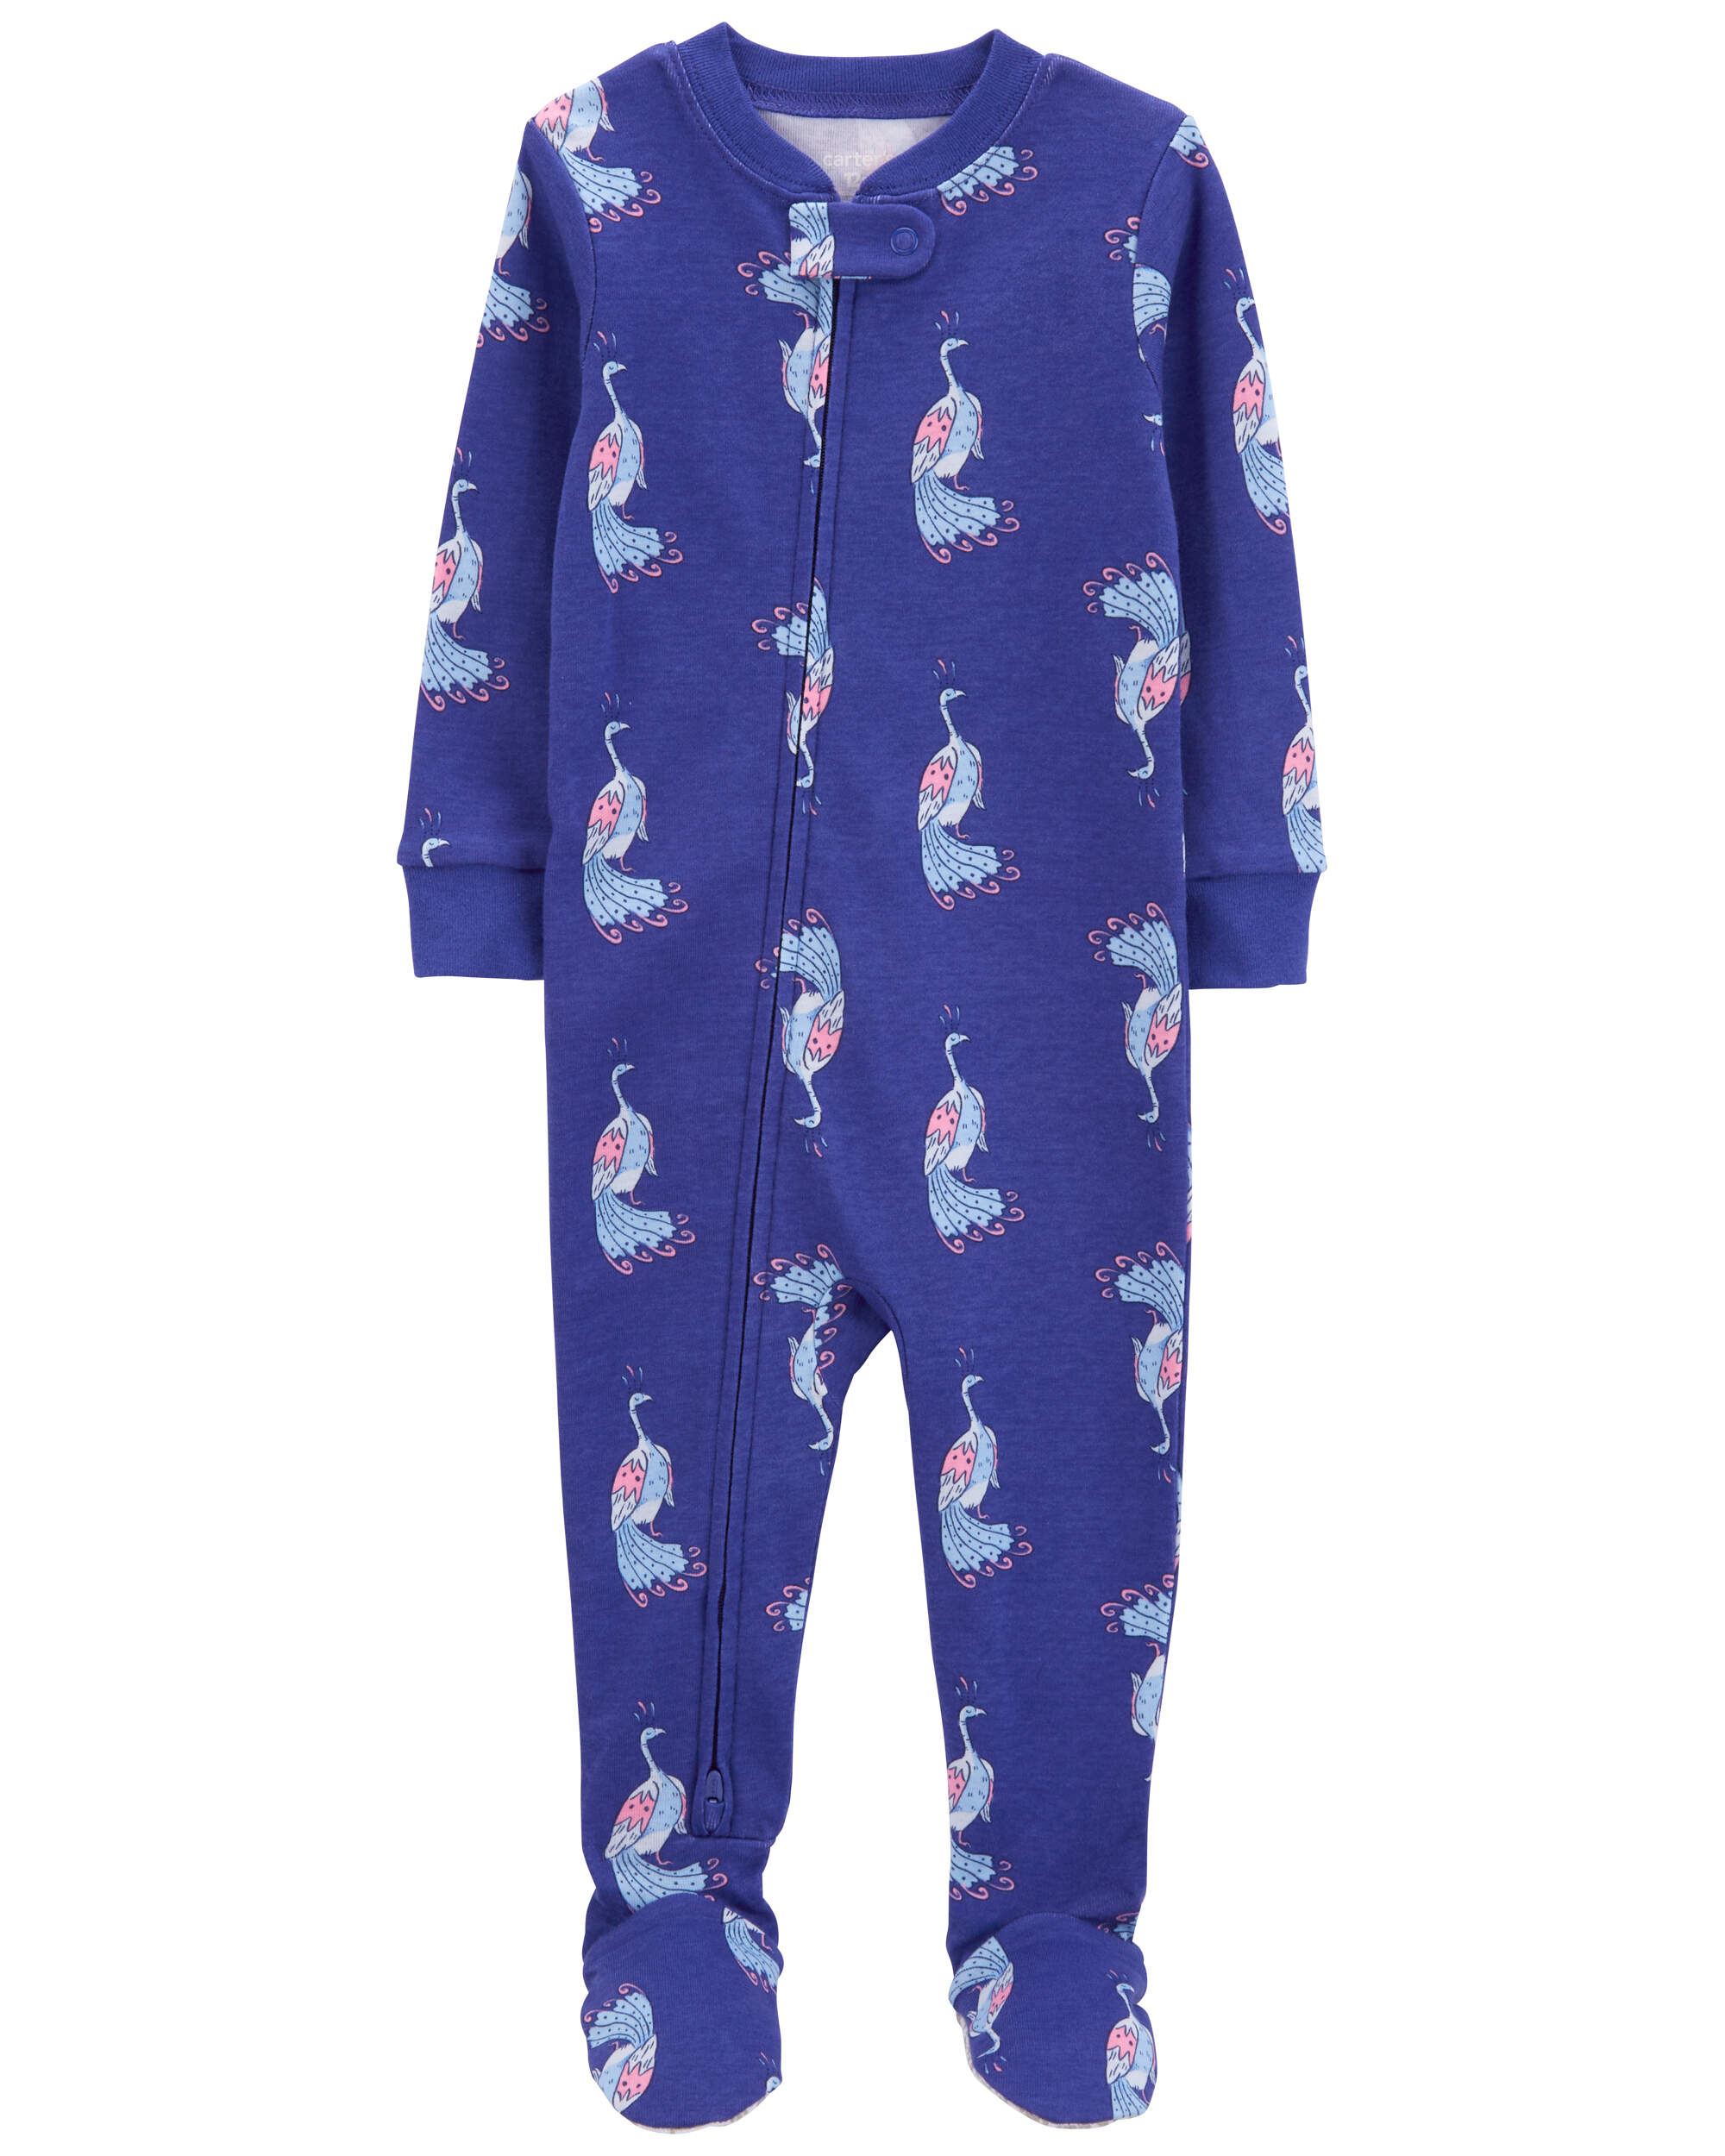 Toddler 1-Piece Peacock 100% Snug Fit Cotton Footie Pyjamas